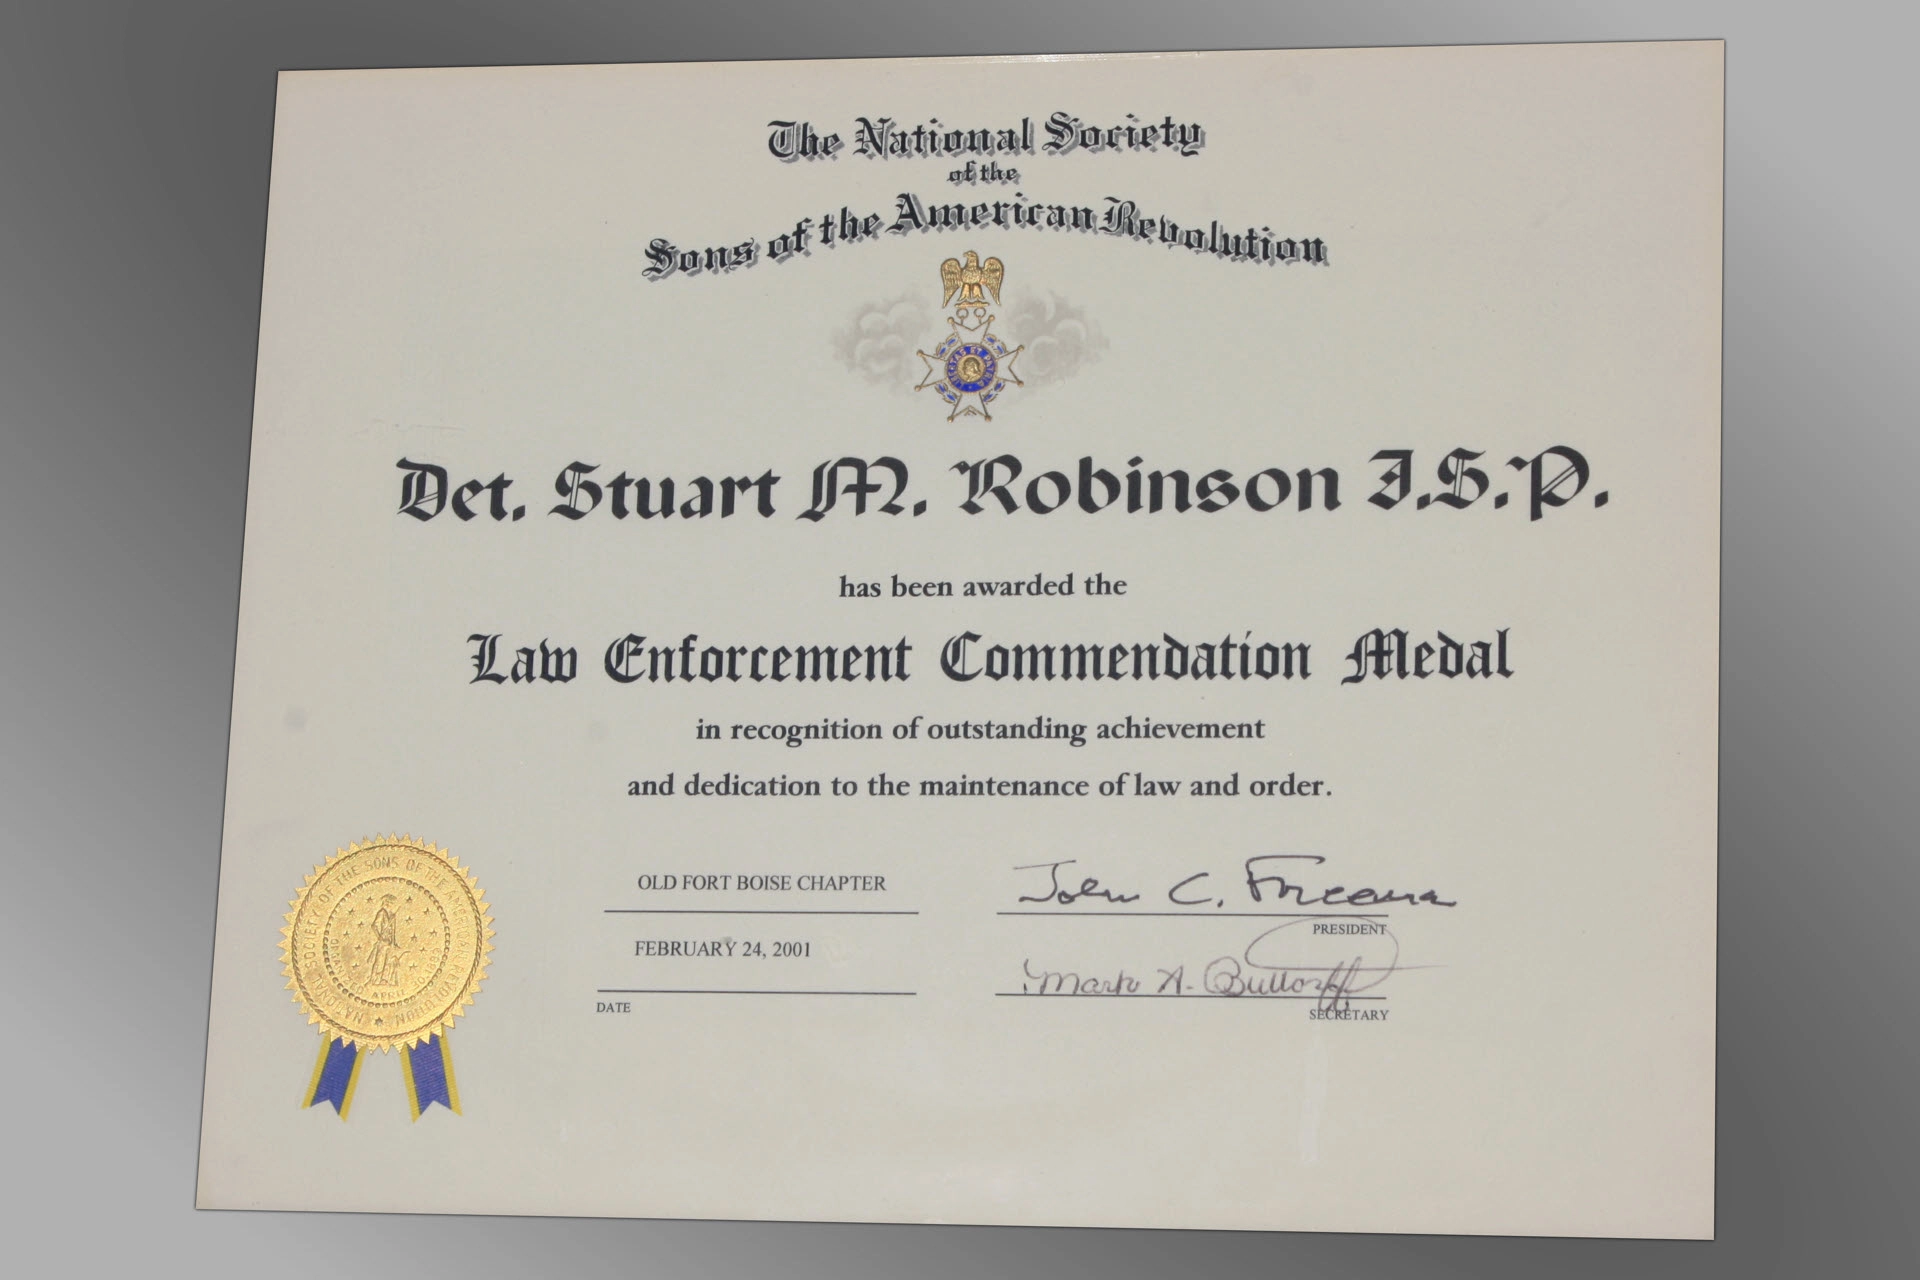 The Law Enforcement Commendation Medal awarded to Det. Stuart M. Robinson